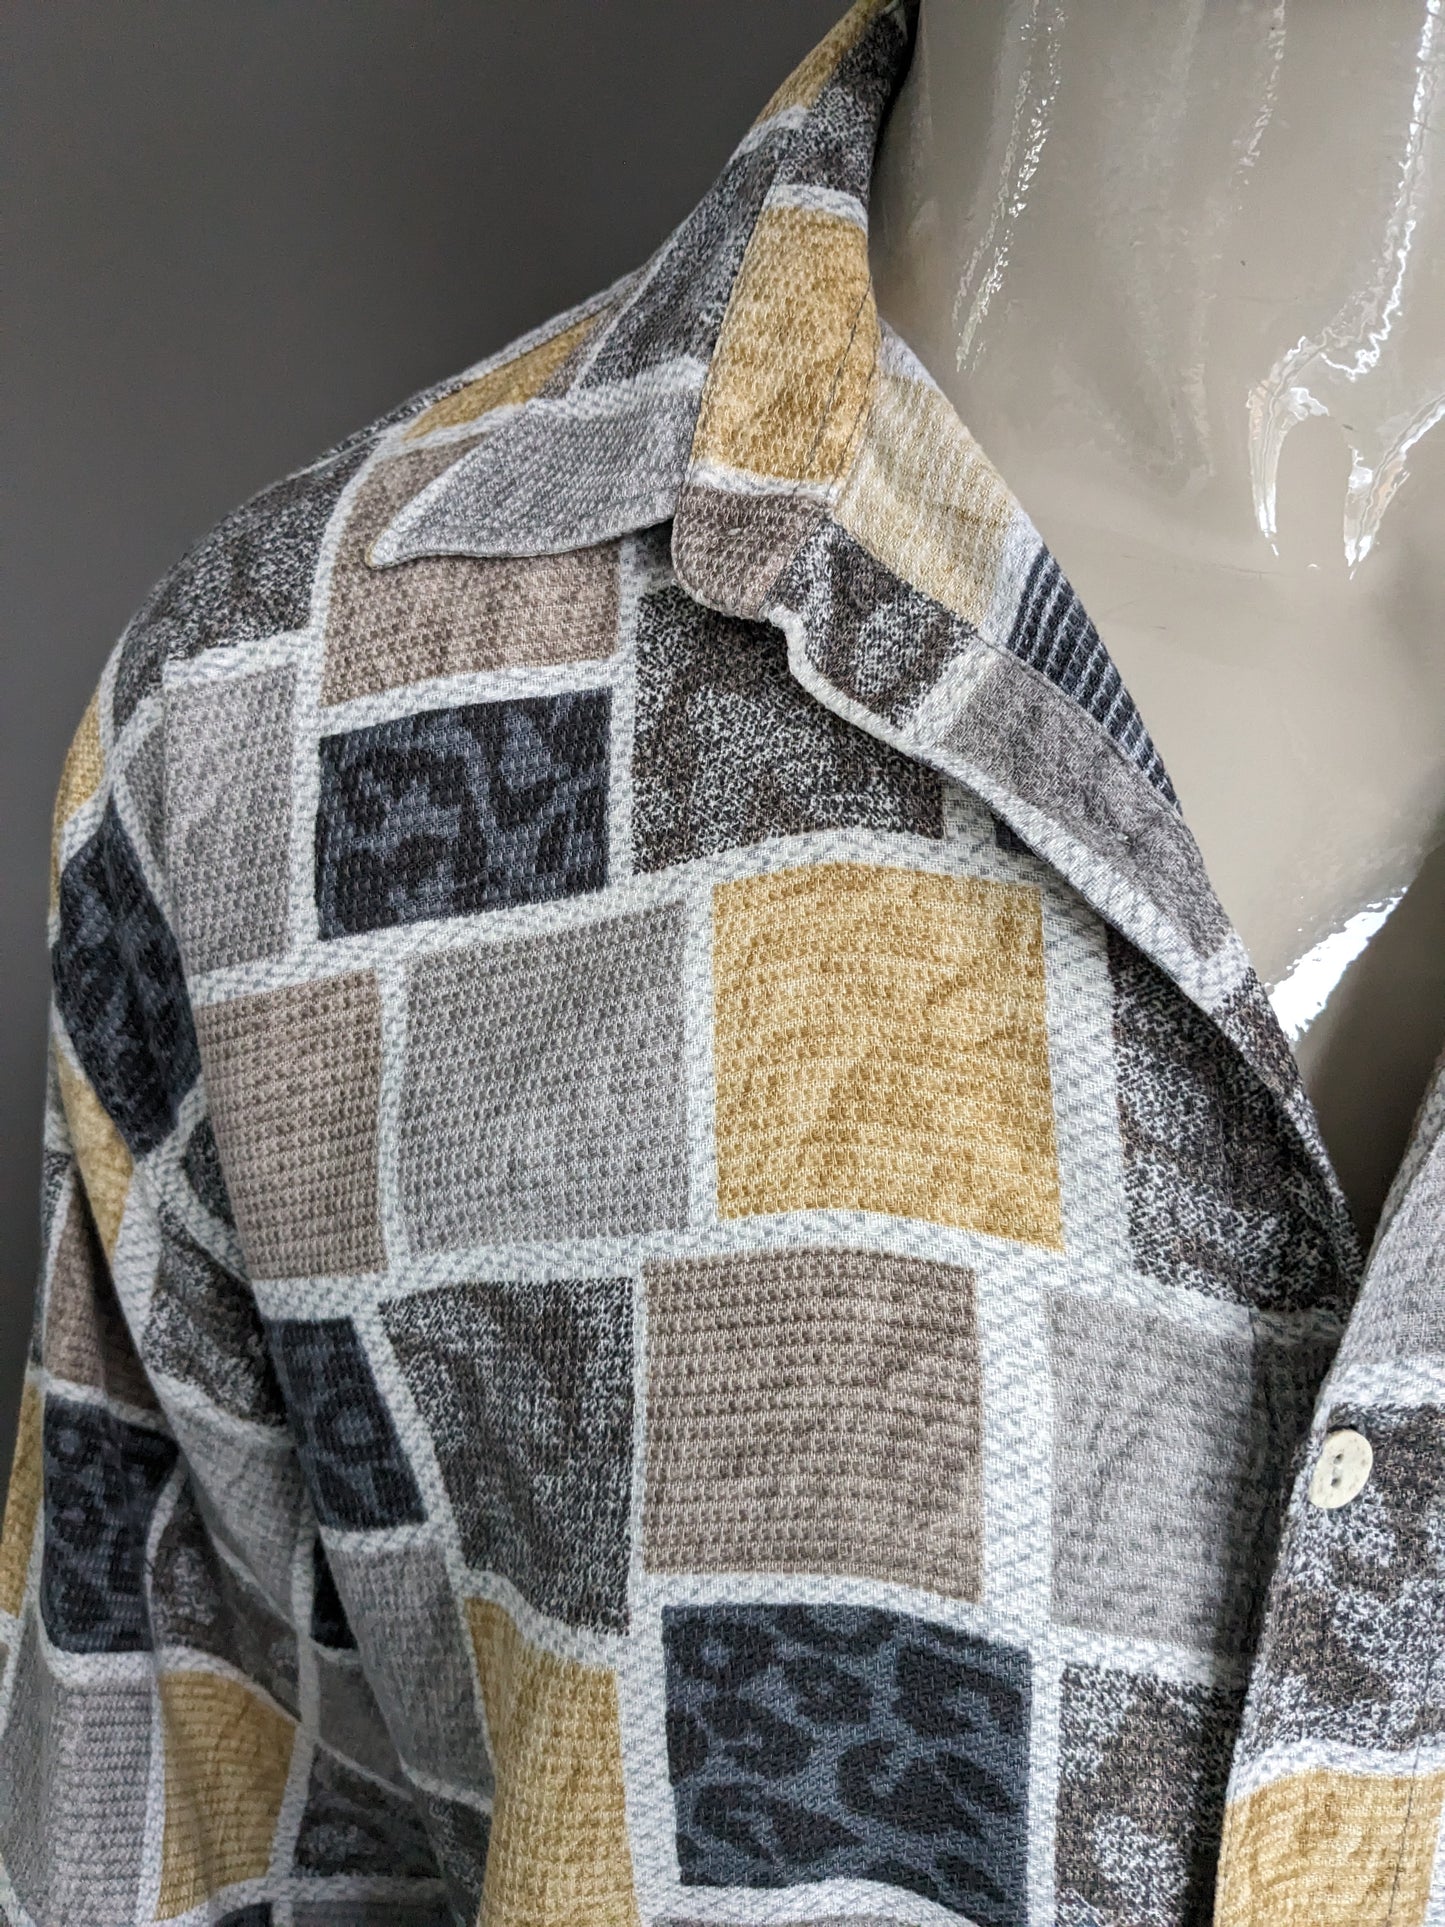 Vintage Seasons Shirt Short Sleeve. Brown yellow gray print. Size 2XL / XXL.